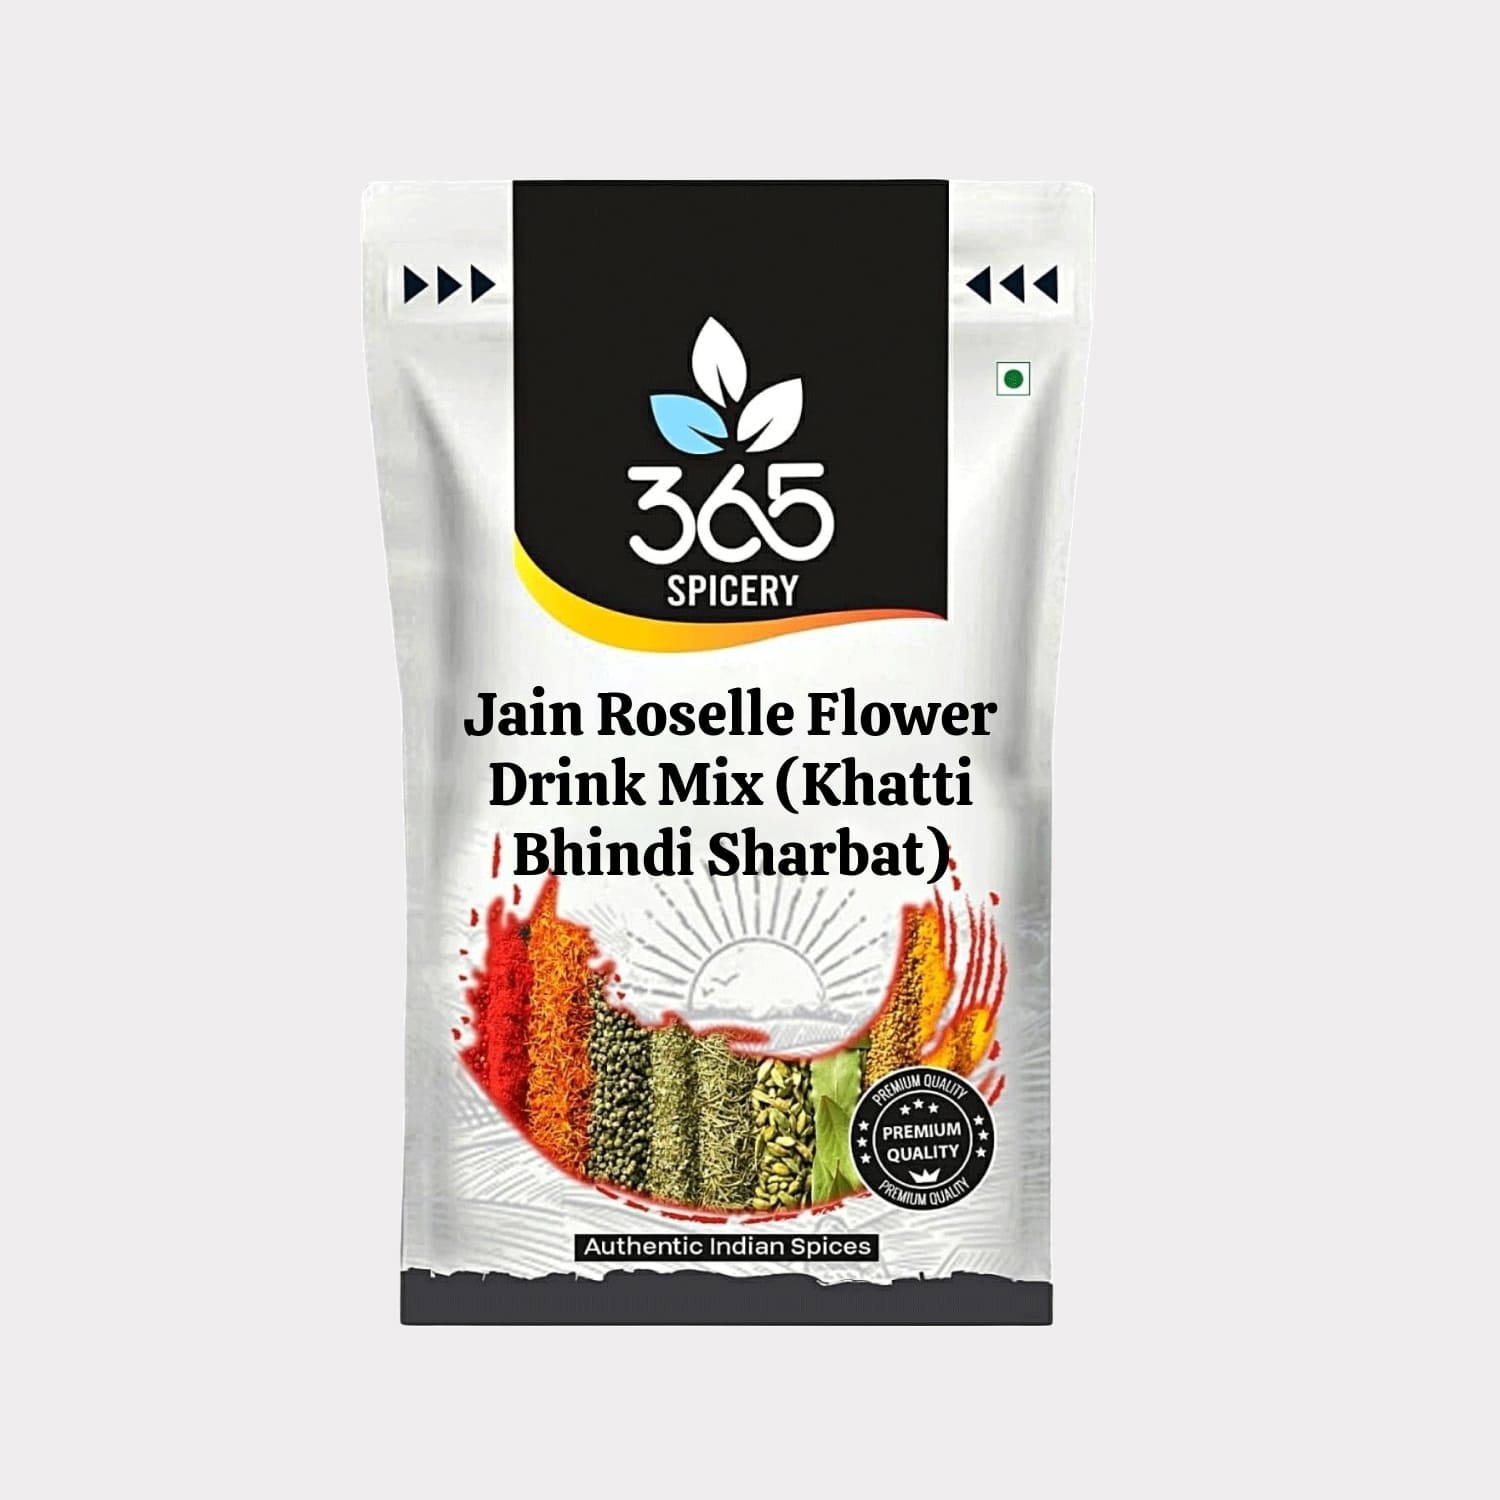 Jain Roselle Flower Drink Mix (Khatti Bhindi Sharbat)